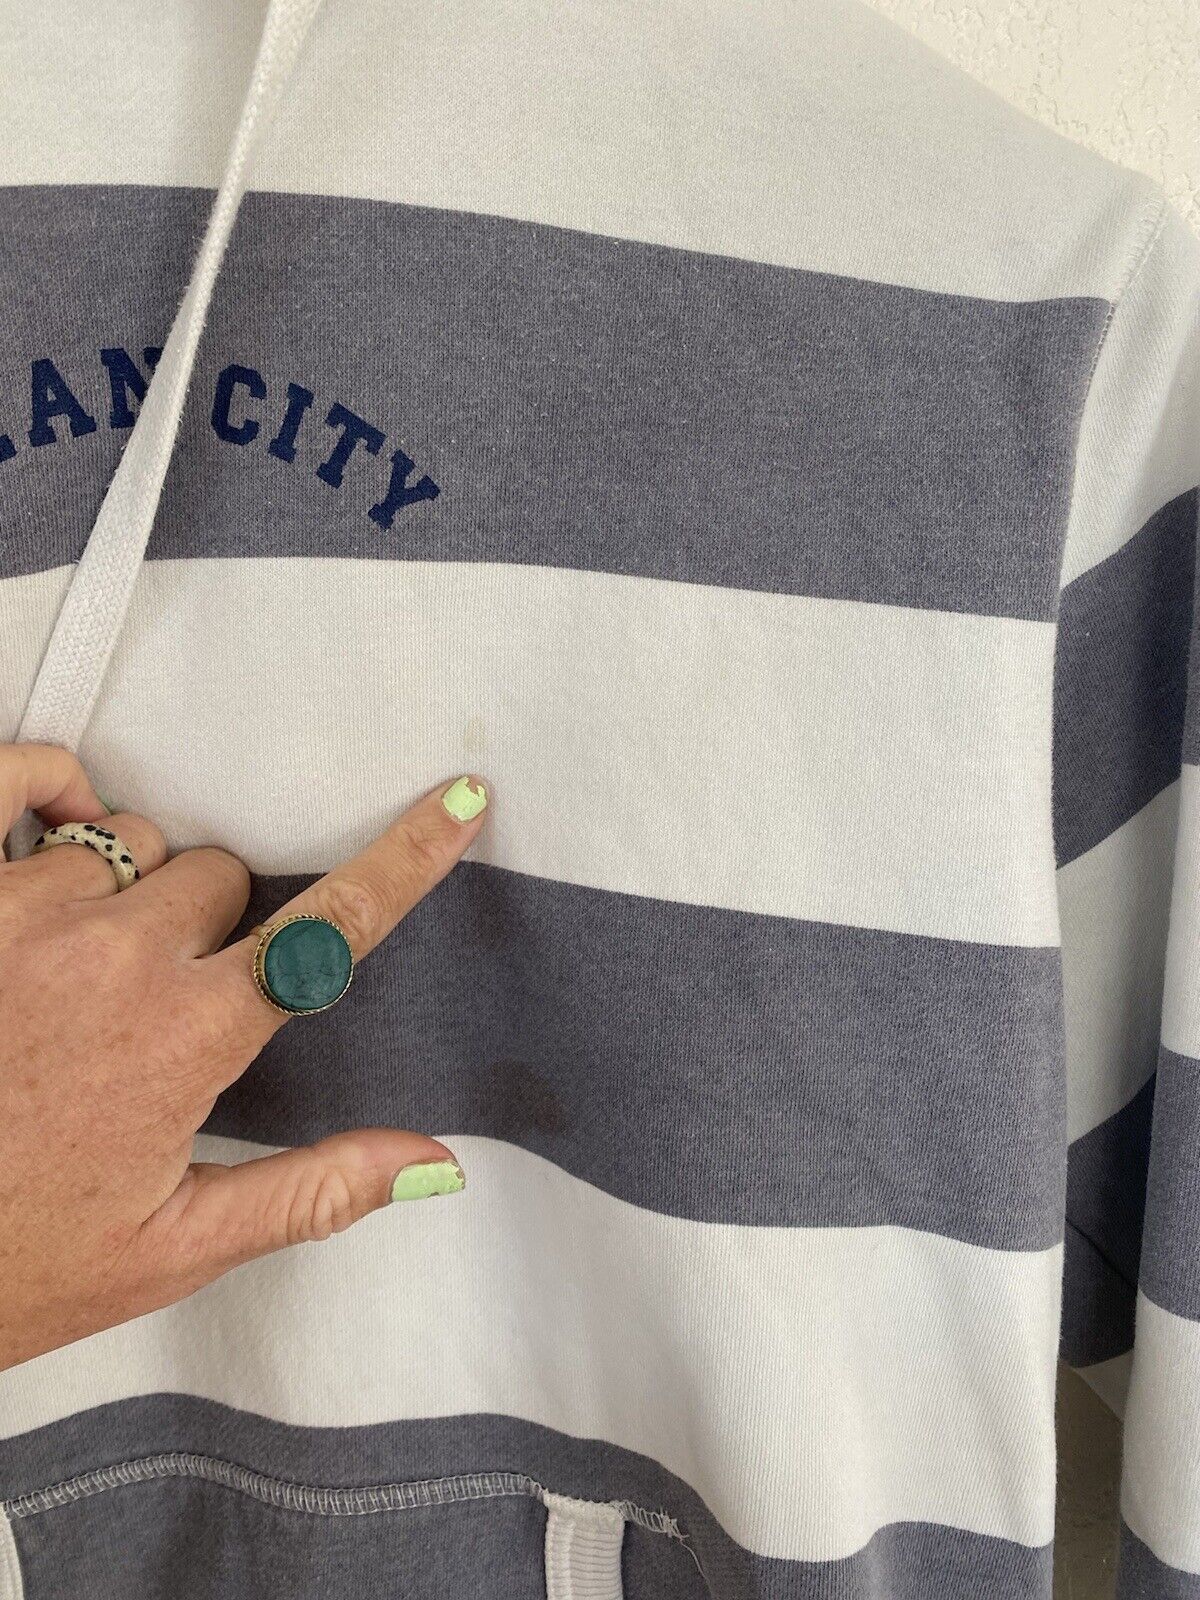 Blue and White Stripe Pullover Hoodie Sweatshirt - Ocean City - Women's Medium